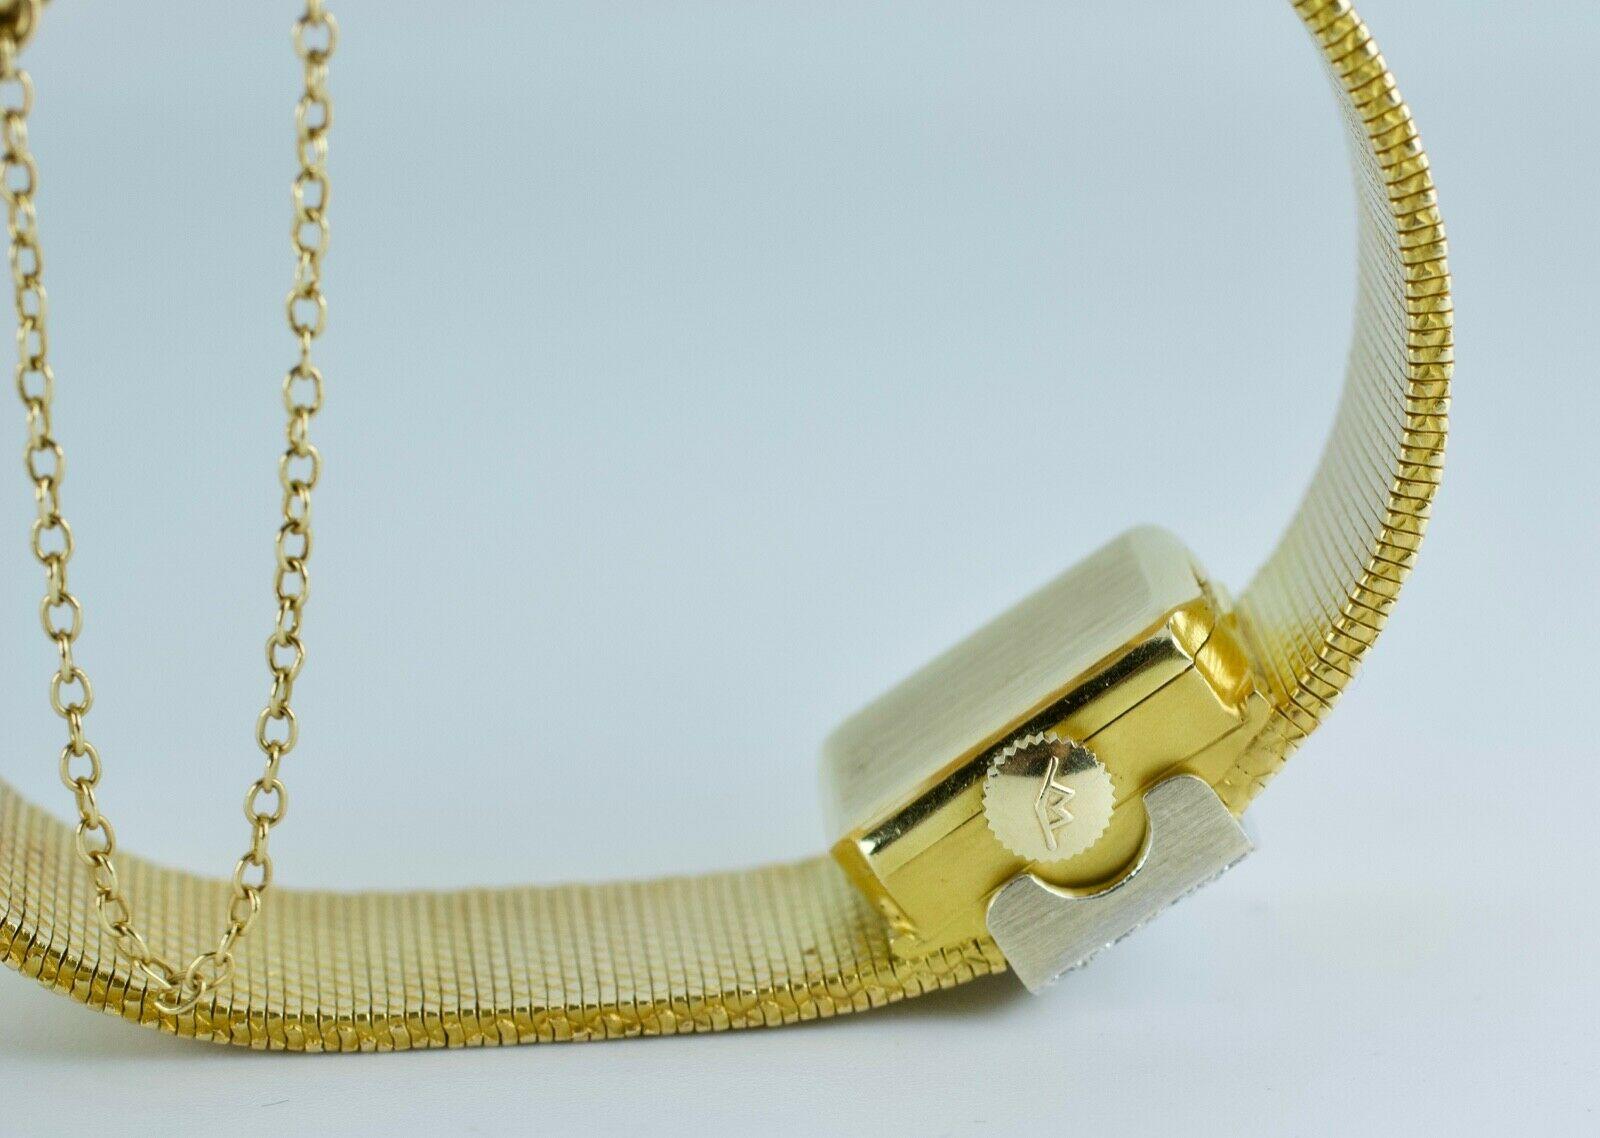 Mario Buccellati 14k Yellow Gold Bracelet with White Round Diamond Cover Watch 3